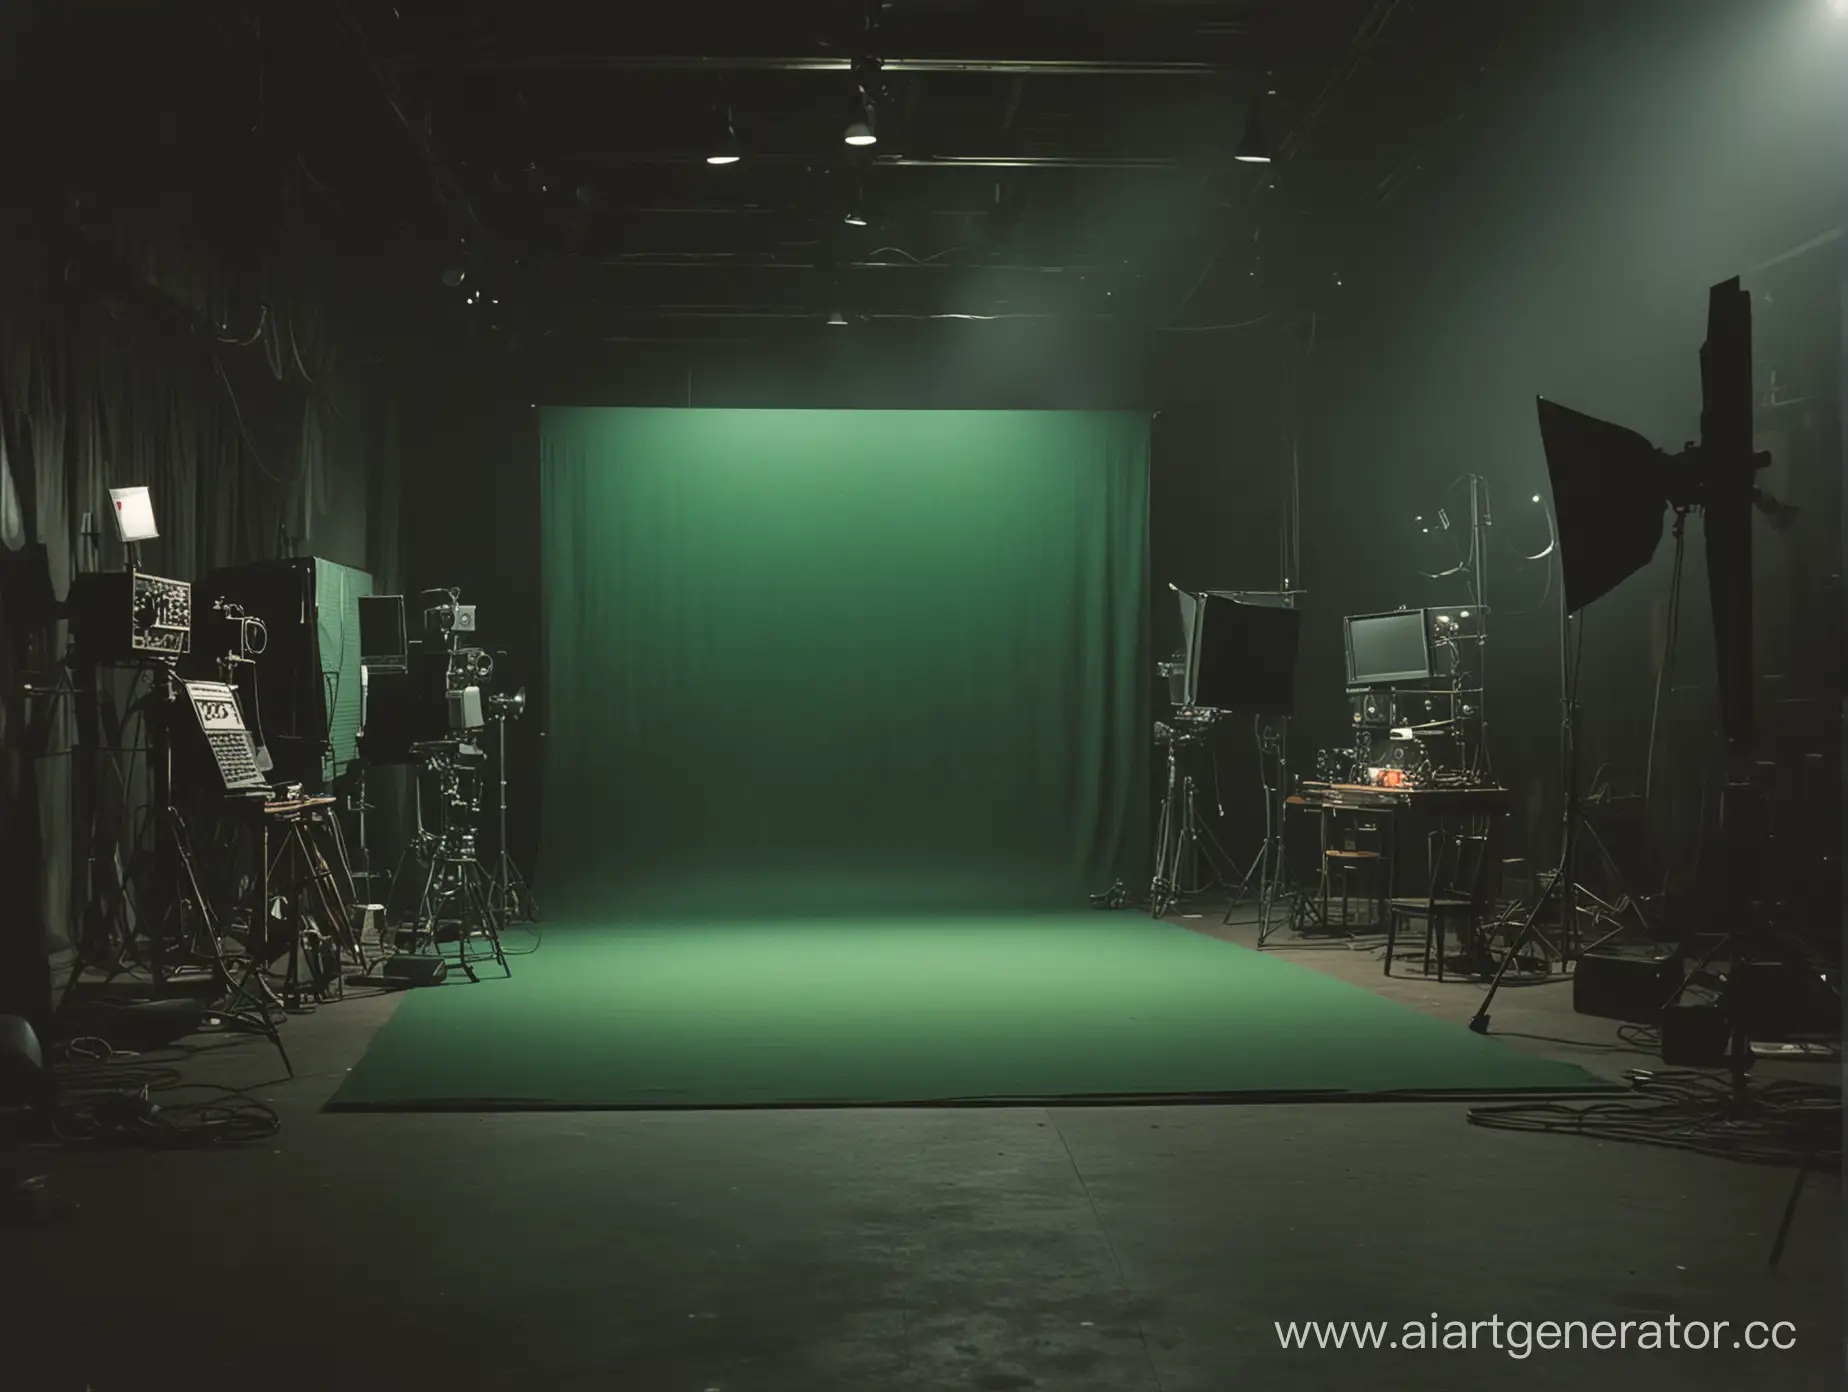 съемочная площадка кино, темная с зеленым